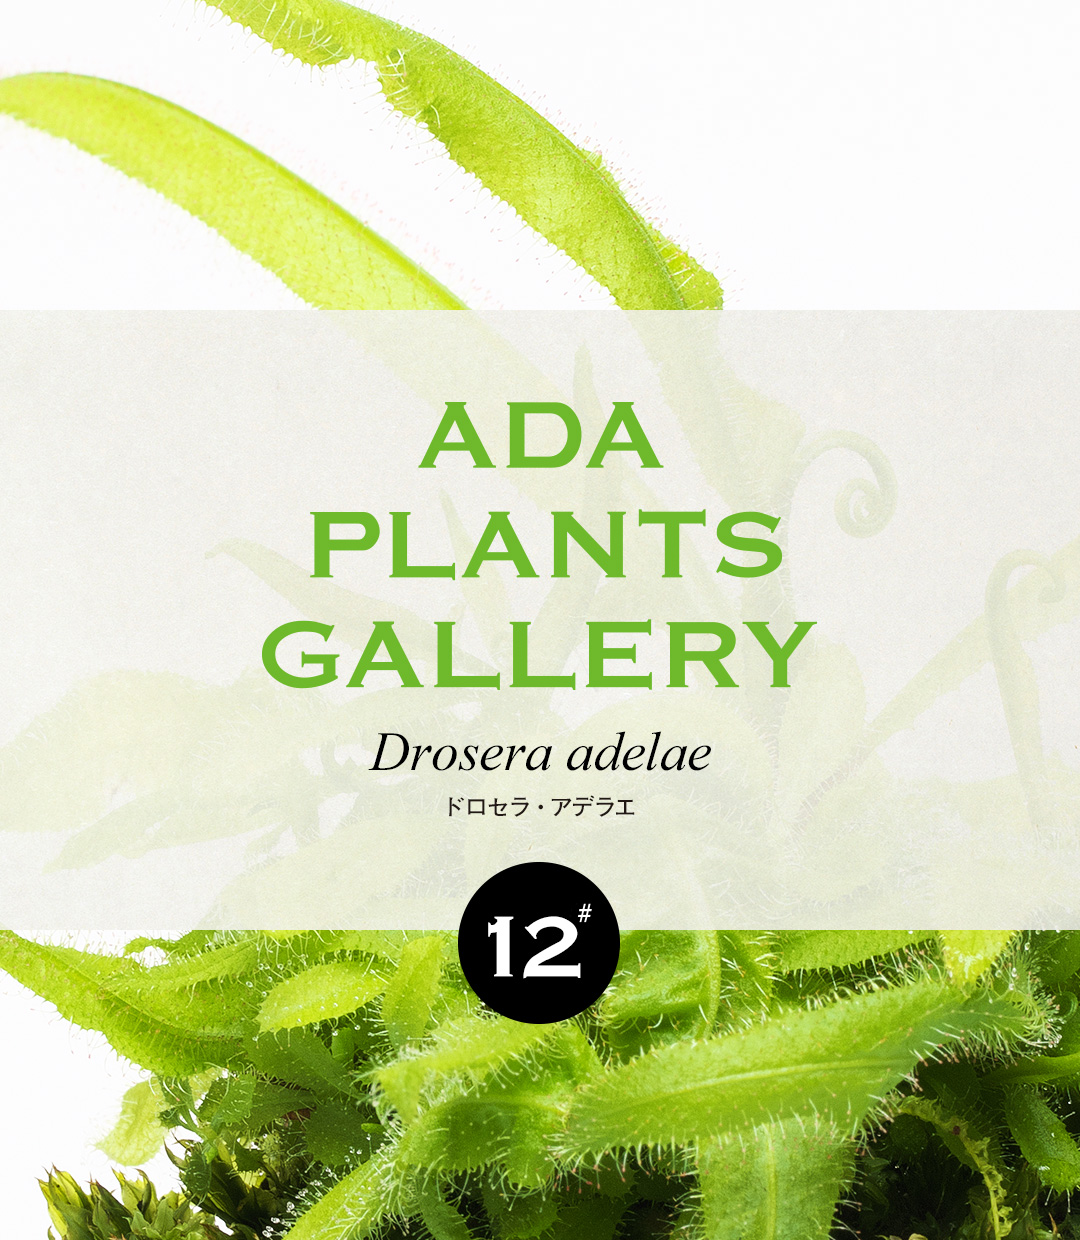 ADA PLANTS GALLERY #12 「ドロセラ・アデラエ」